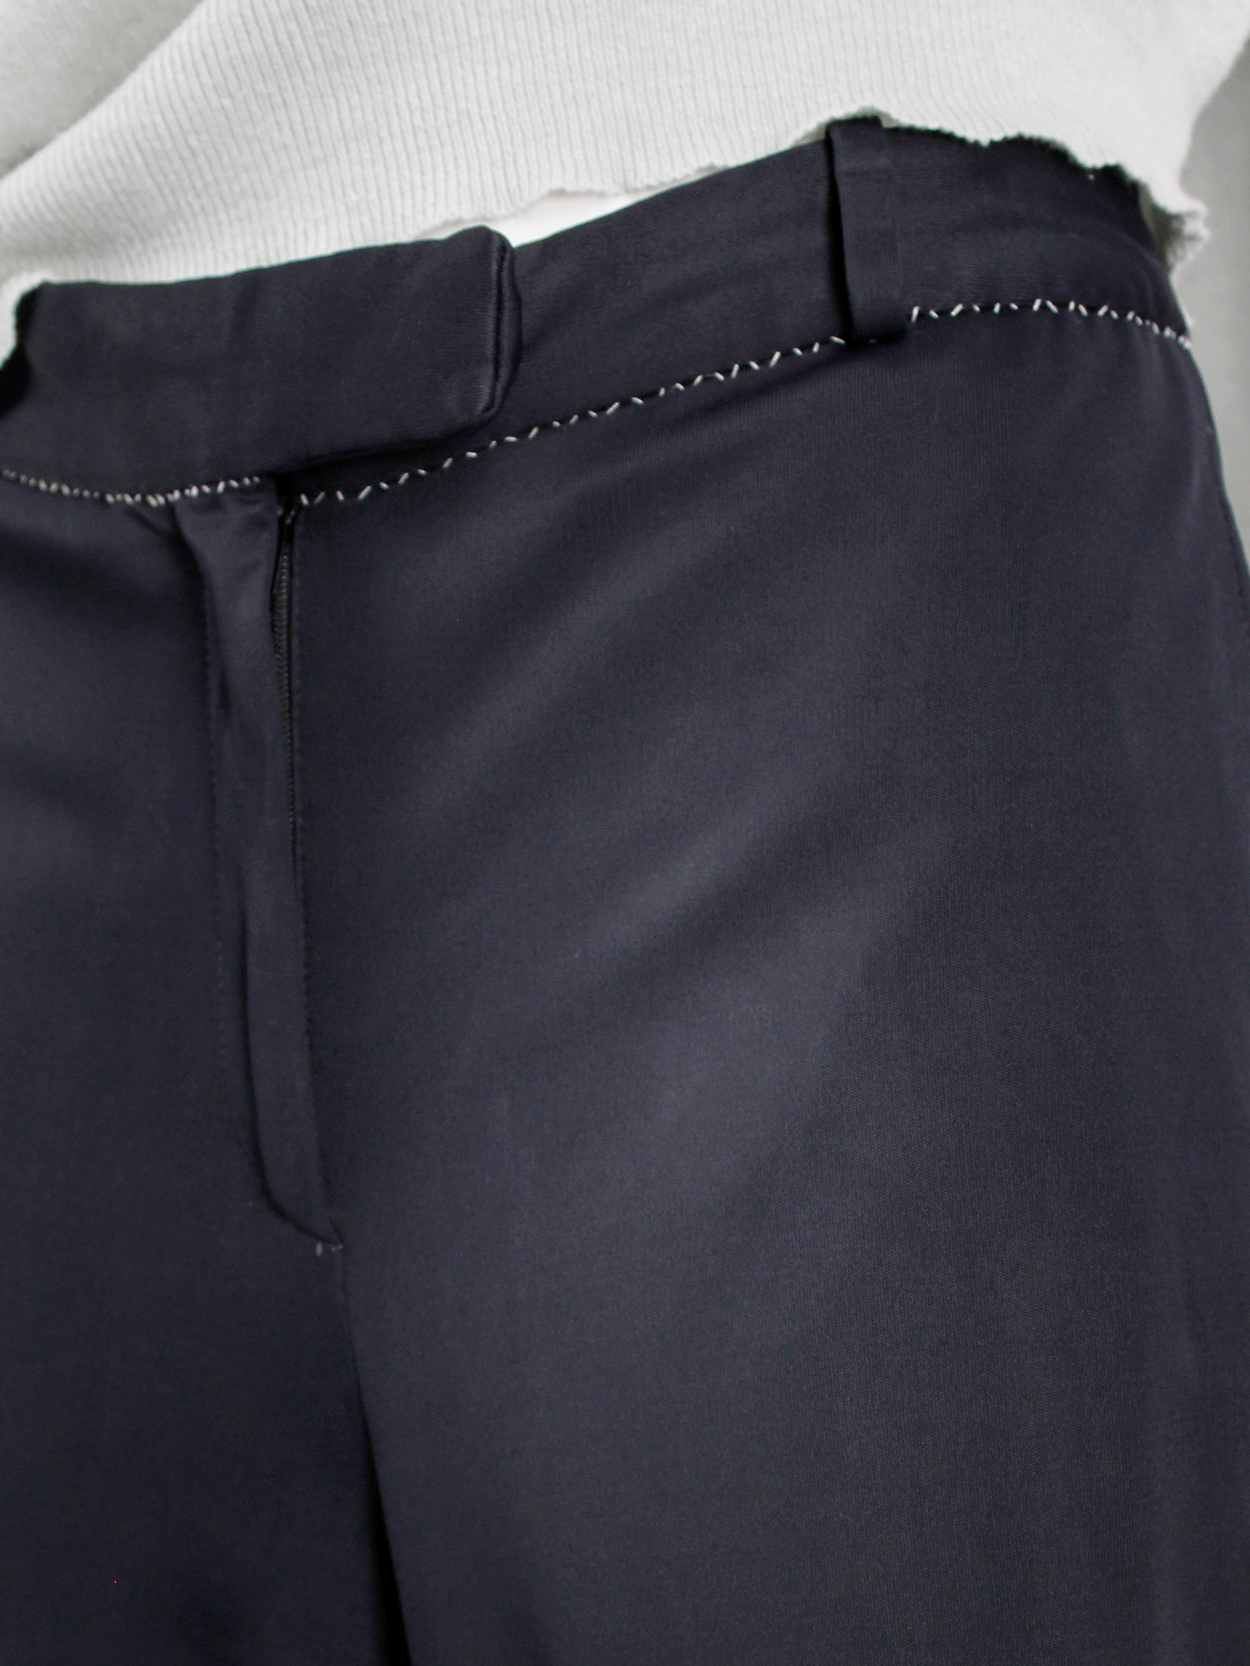 Maison Martin Margiela dark blue trousers with white exposed stitches ...